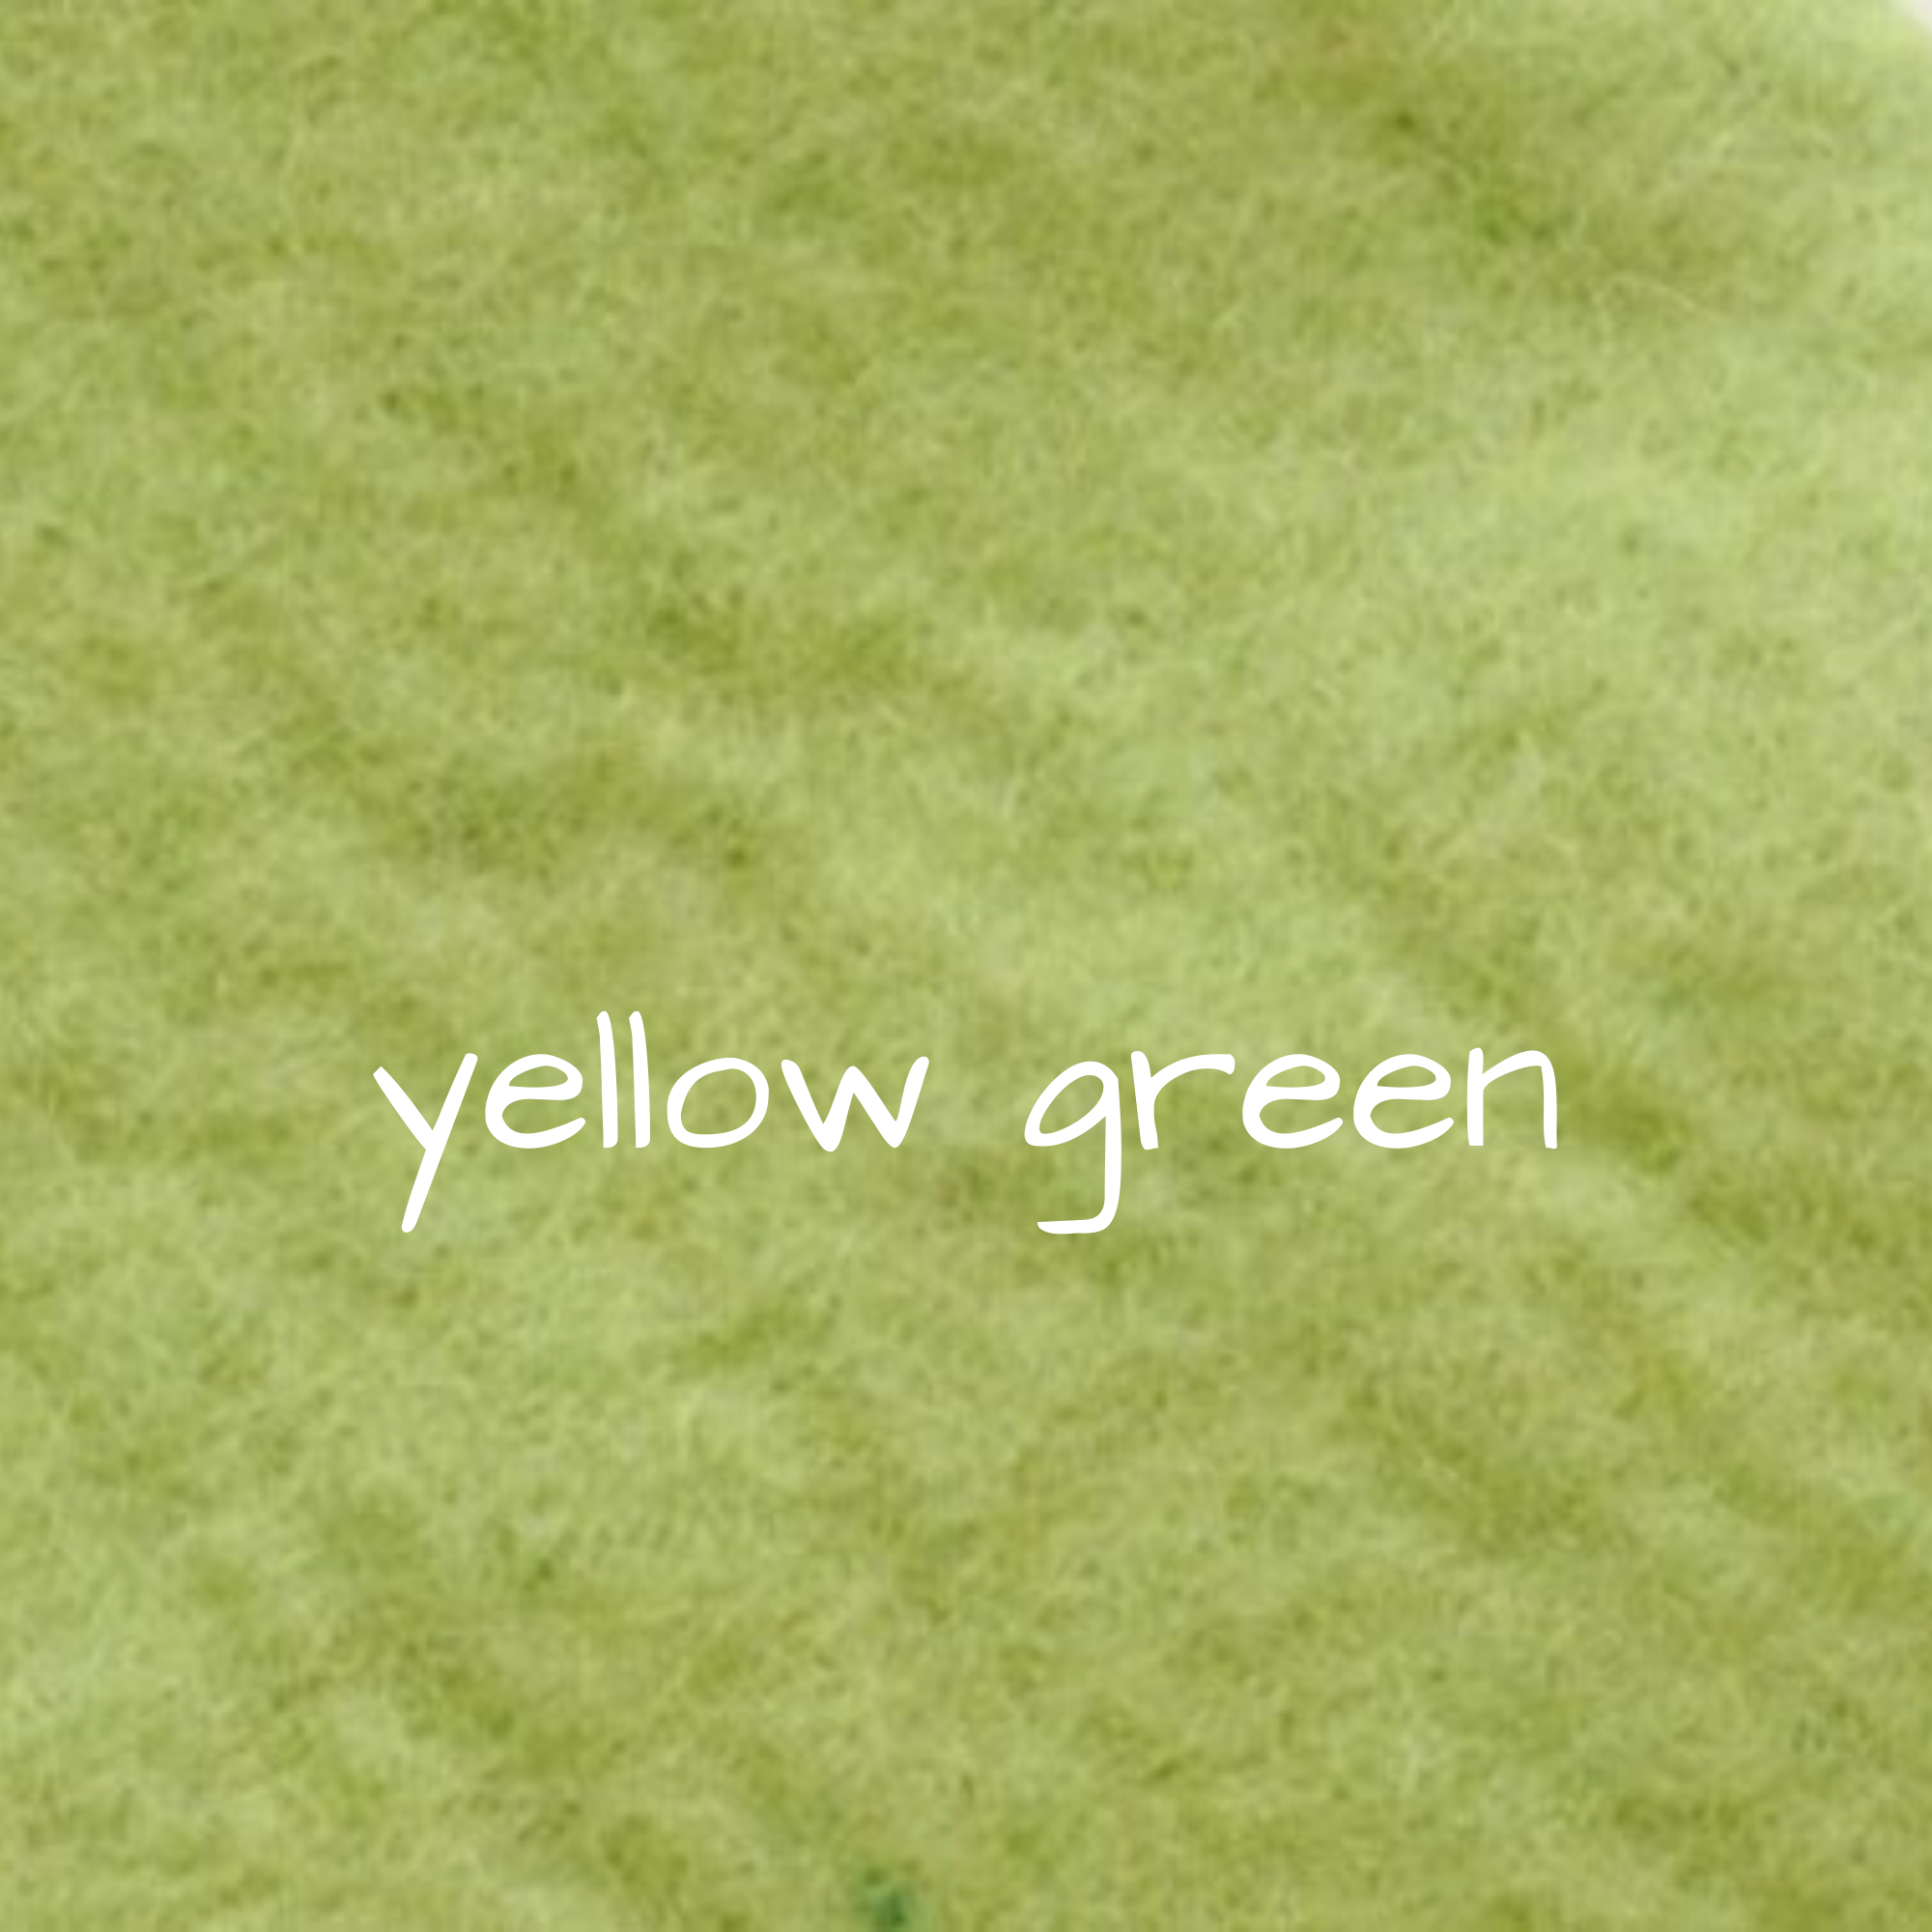 1mm Wool Felt - Lime Green